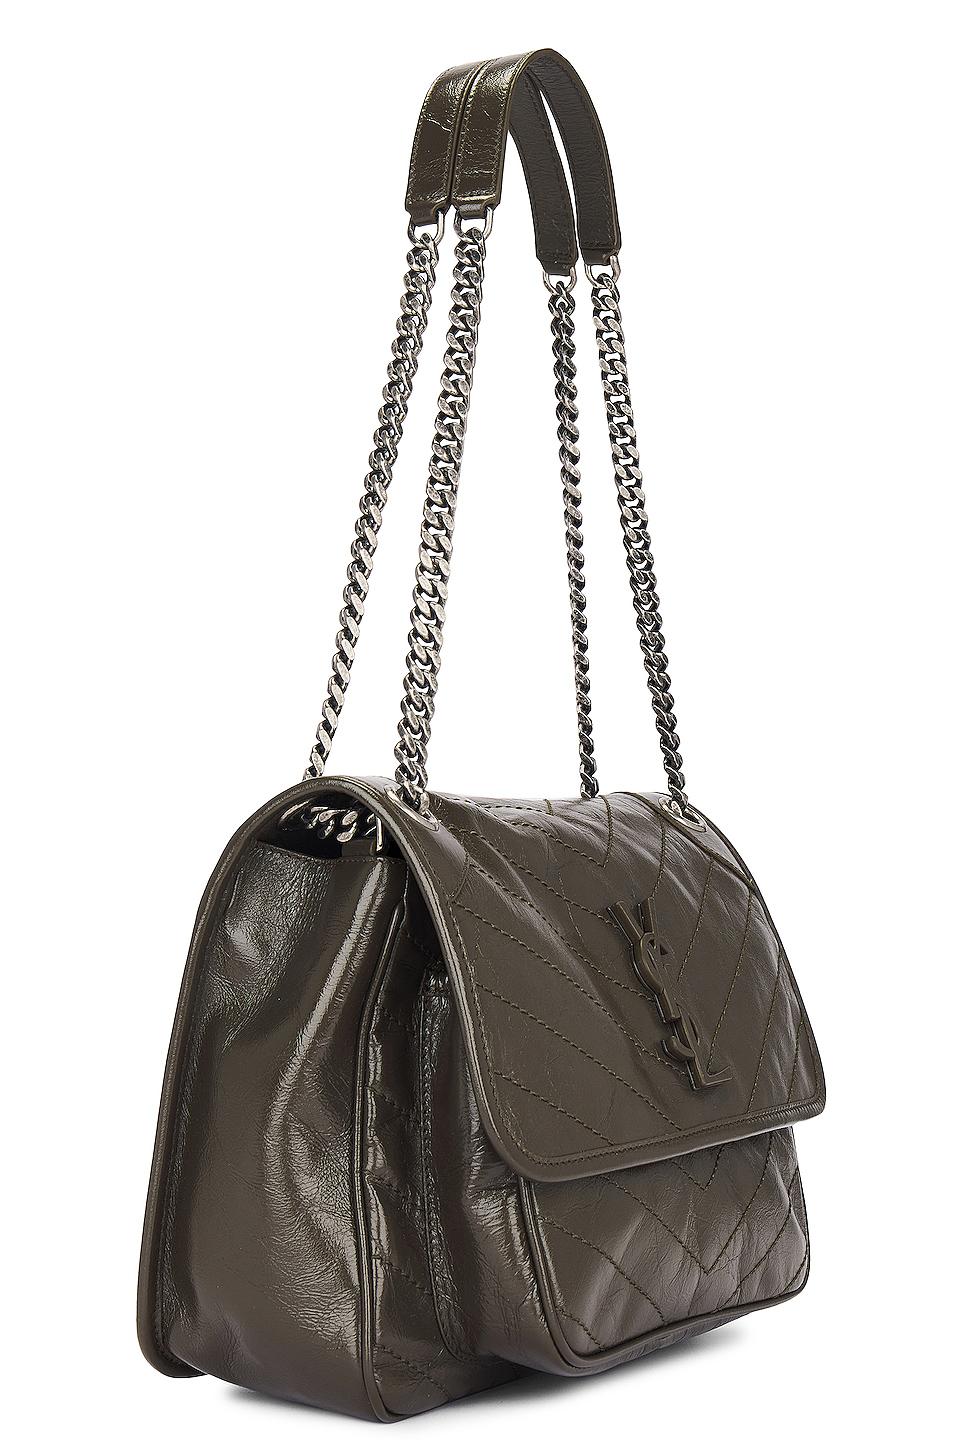 Saint Laurent Medium Niki Chain Bag in Gray